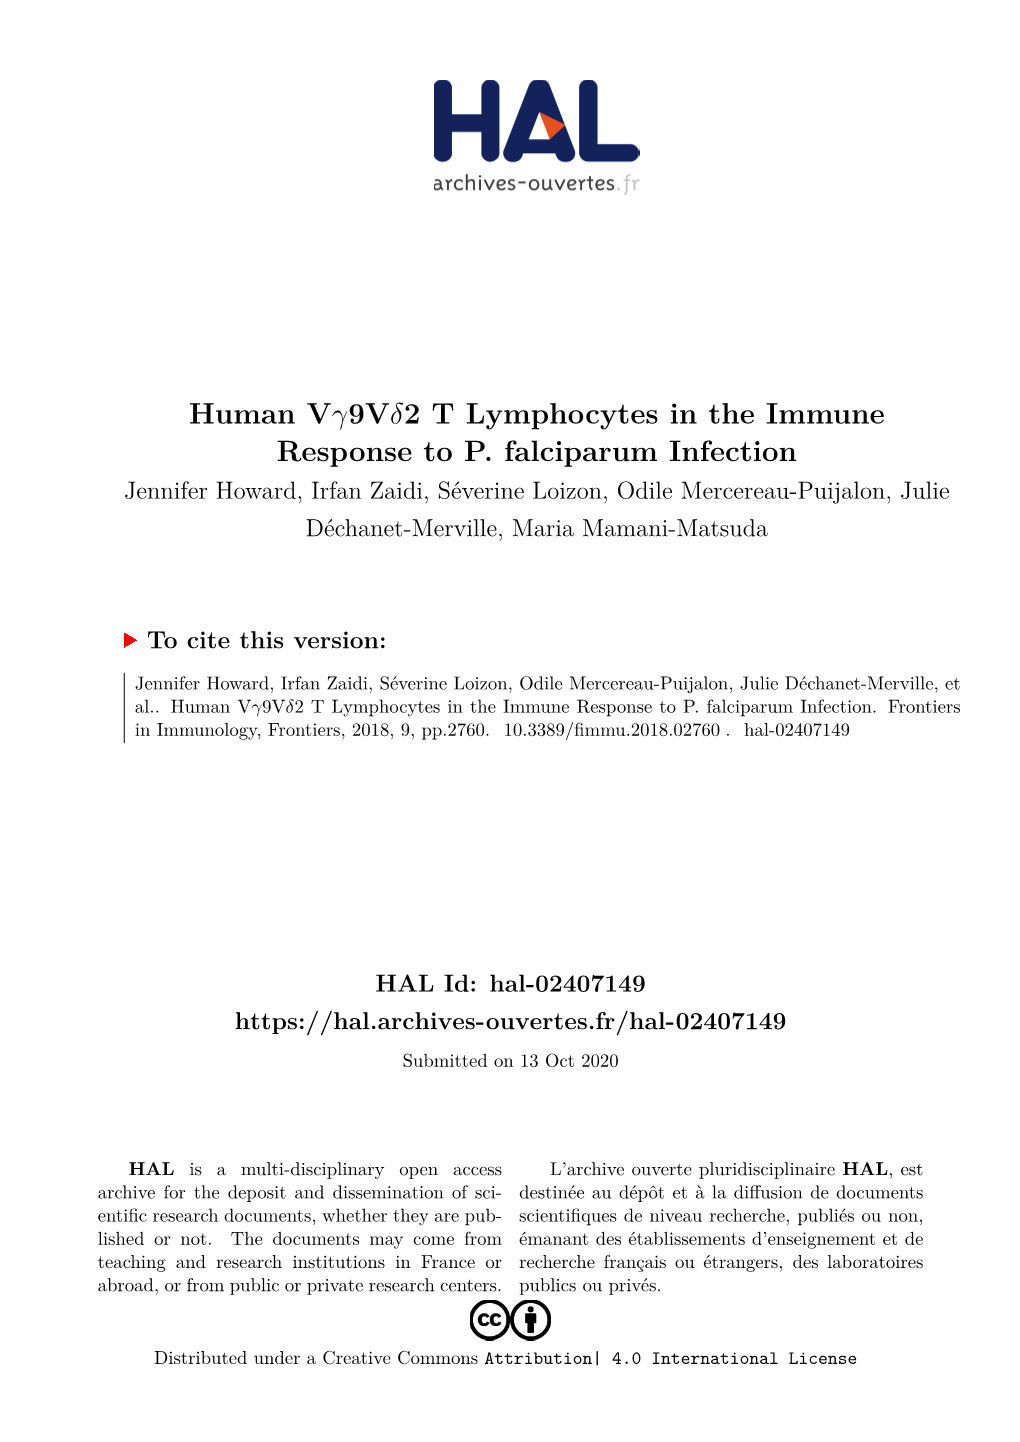 Human V9V2 T Lymphocytes in the Immune Response to P. Falciparum